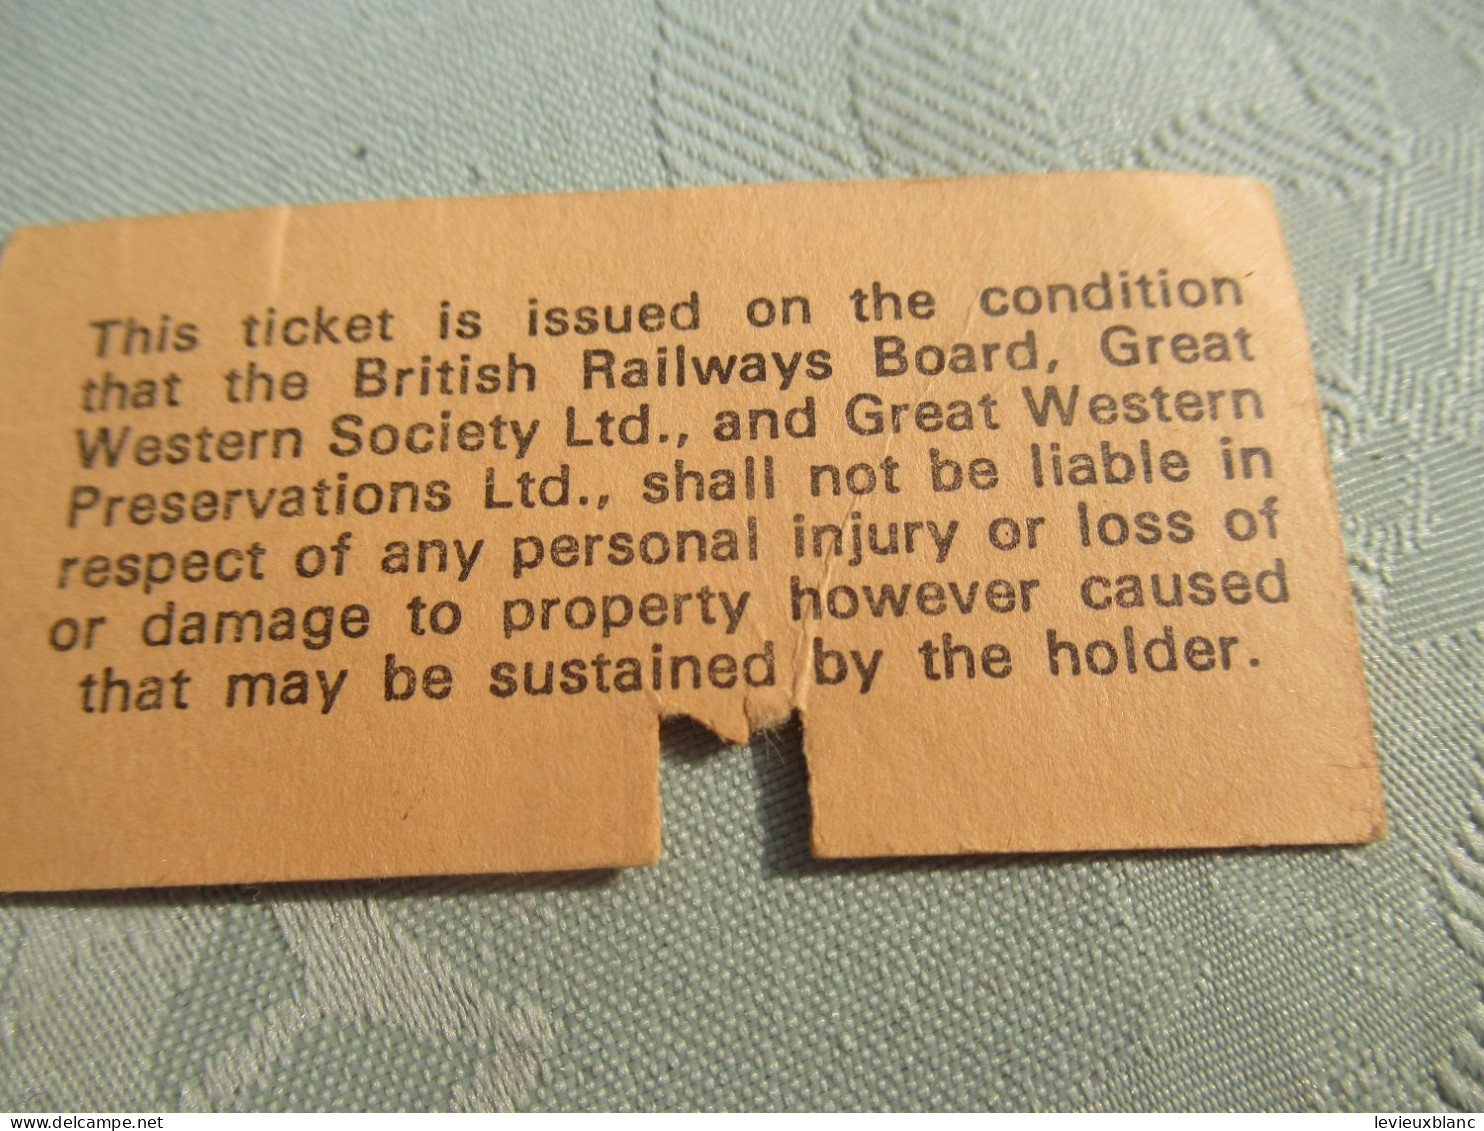 British Railways/ Great Western Society/ DIDCOT/ Aout 1986      TCK248 - Non Classificati